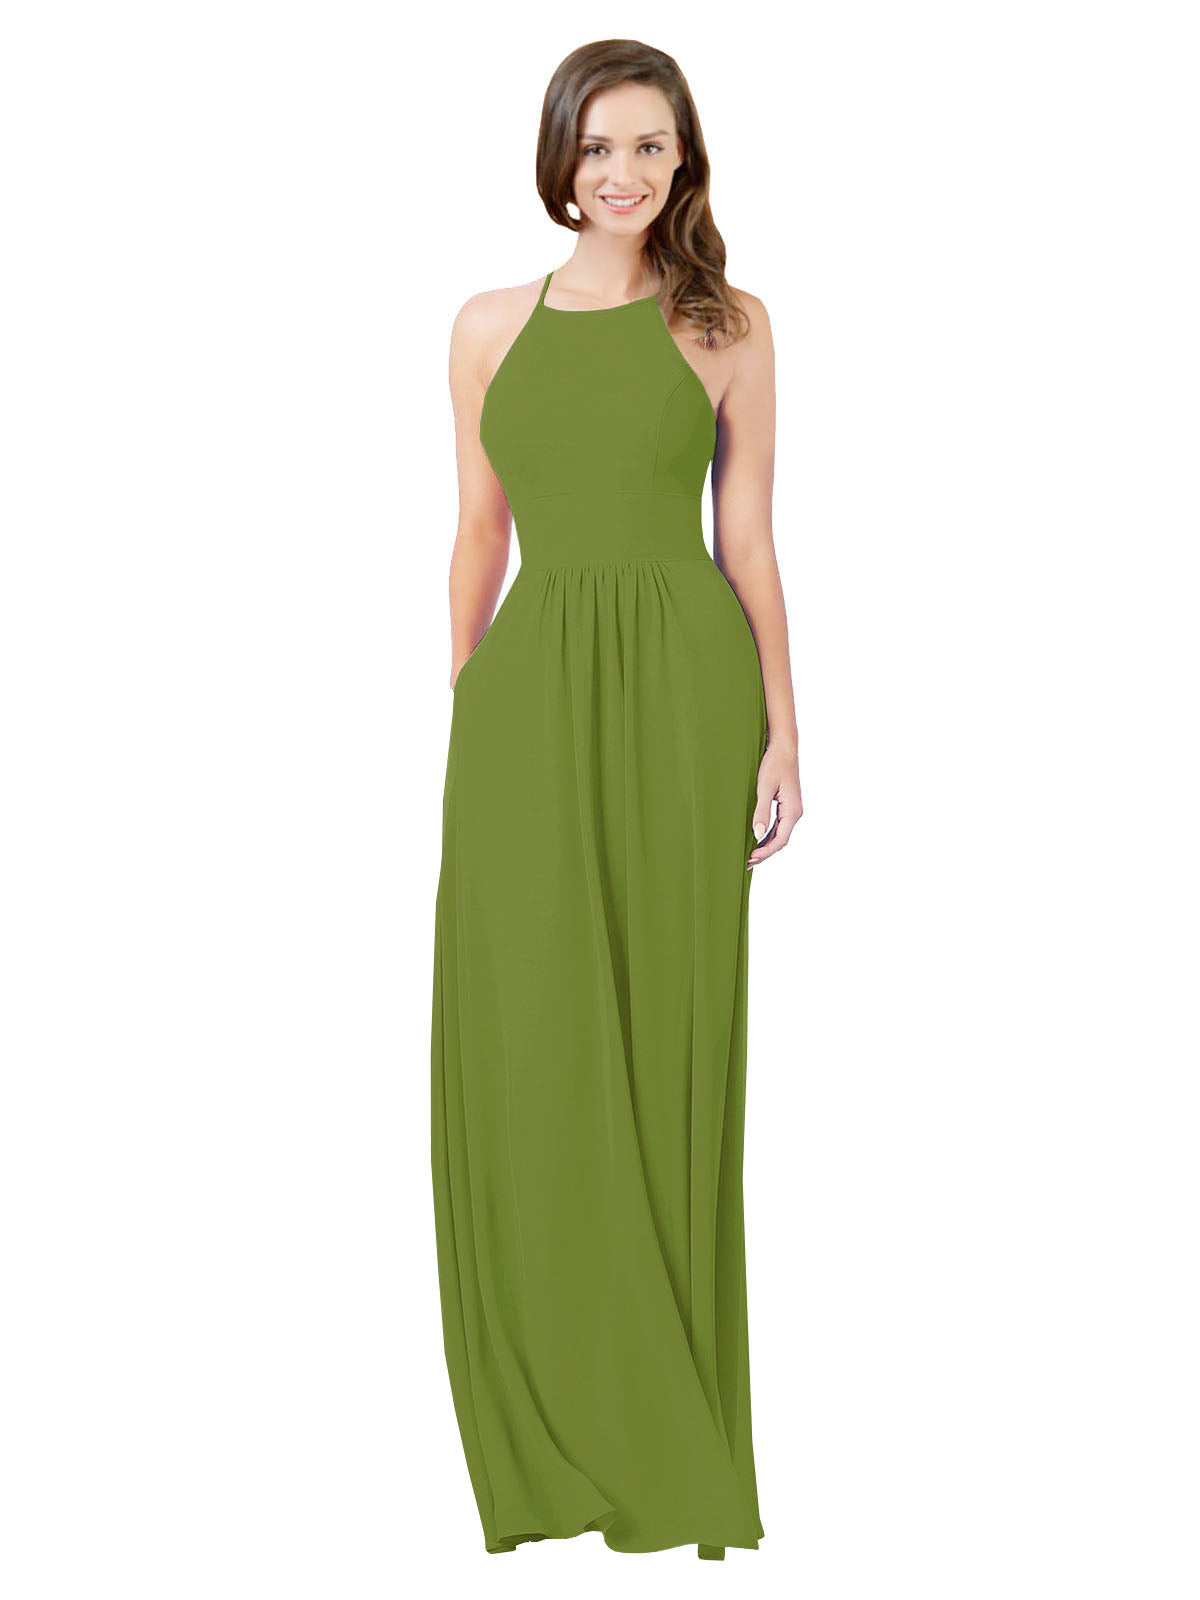 Olive Green A-Line Halter Sleeveless Long Bridesmaid Dress Cindy